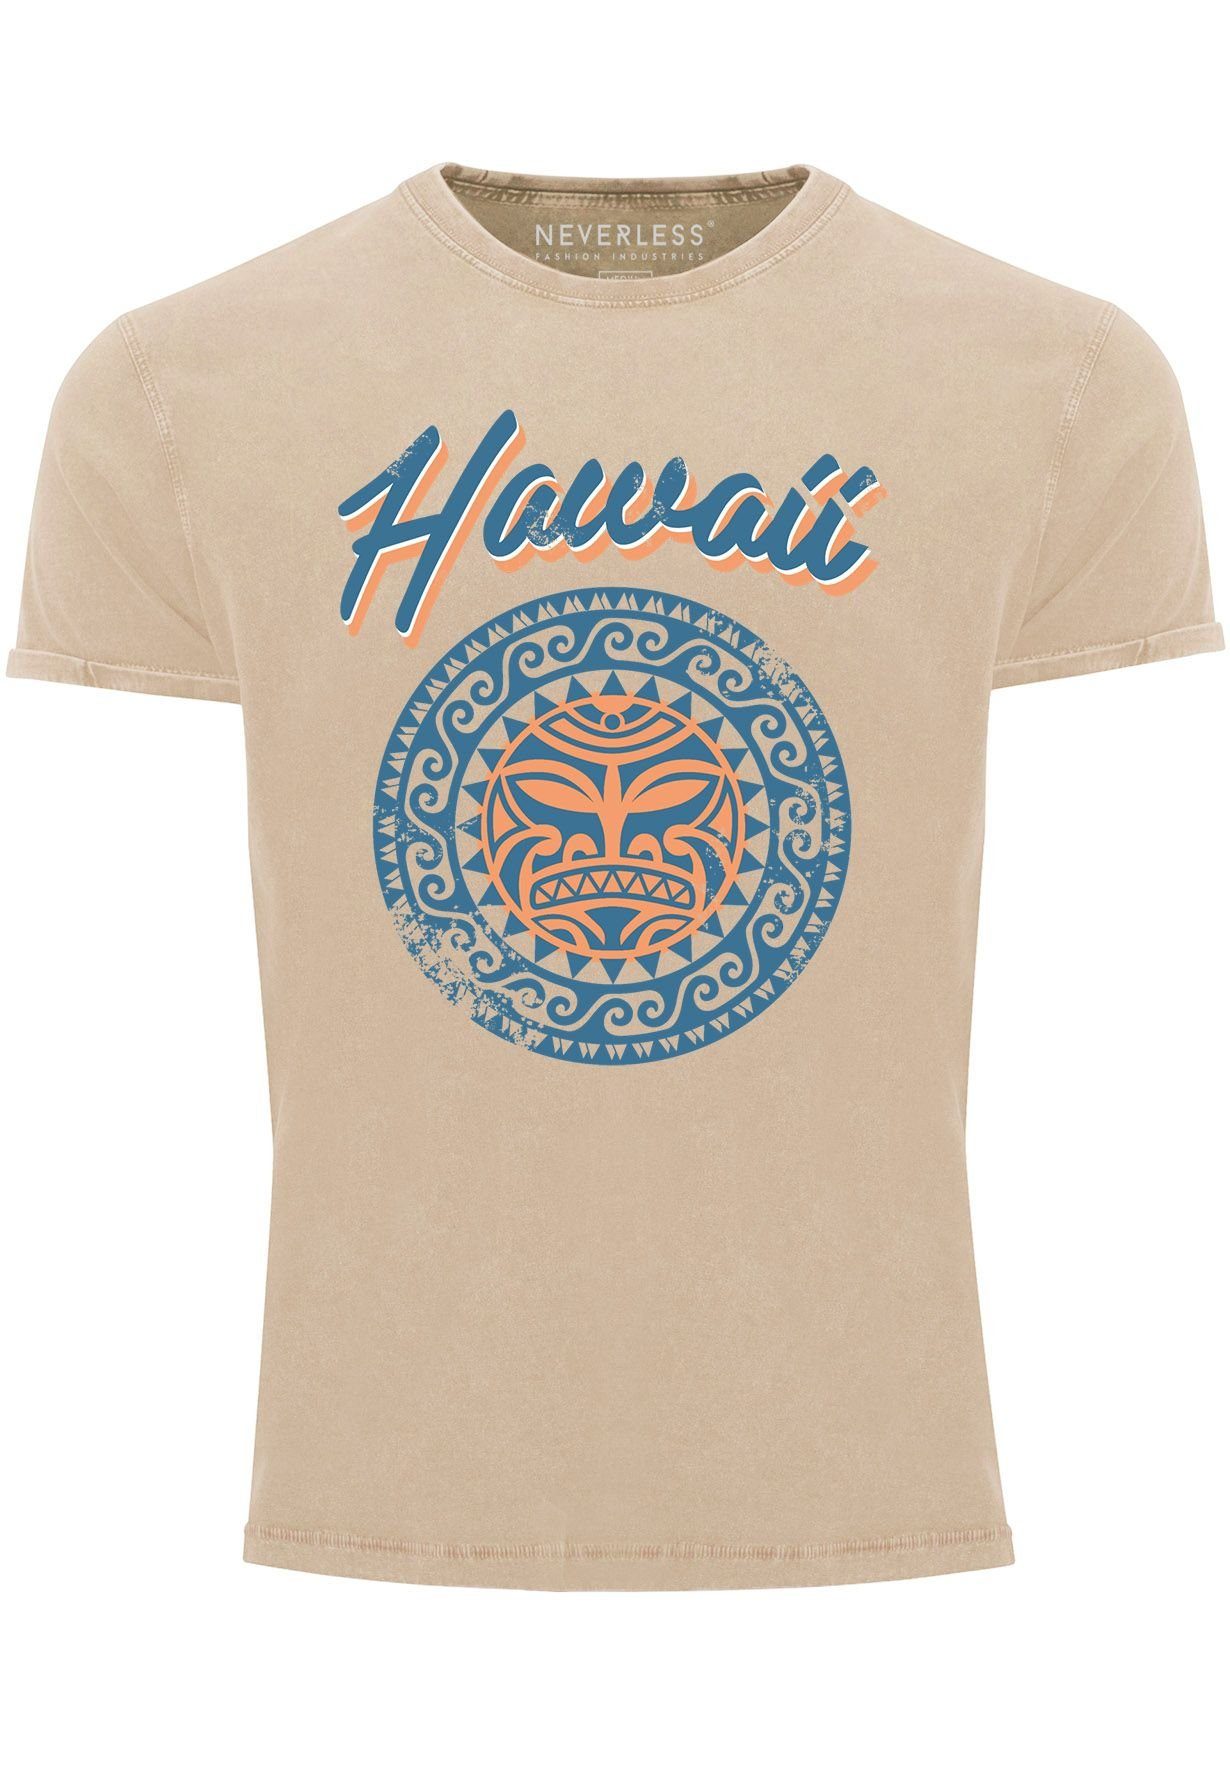 Neverless Print-Shirt Herren T-Shirt Hawaii Tattoo Tribal Maui Ethno Style Printshirt Vintag mit Print natur